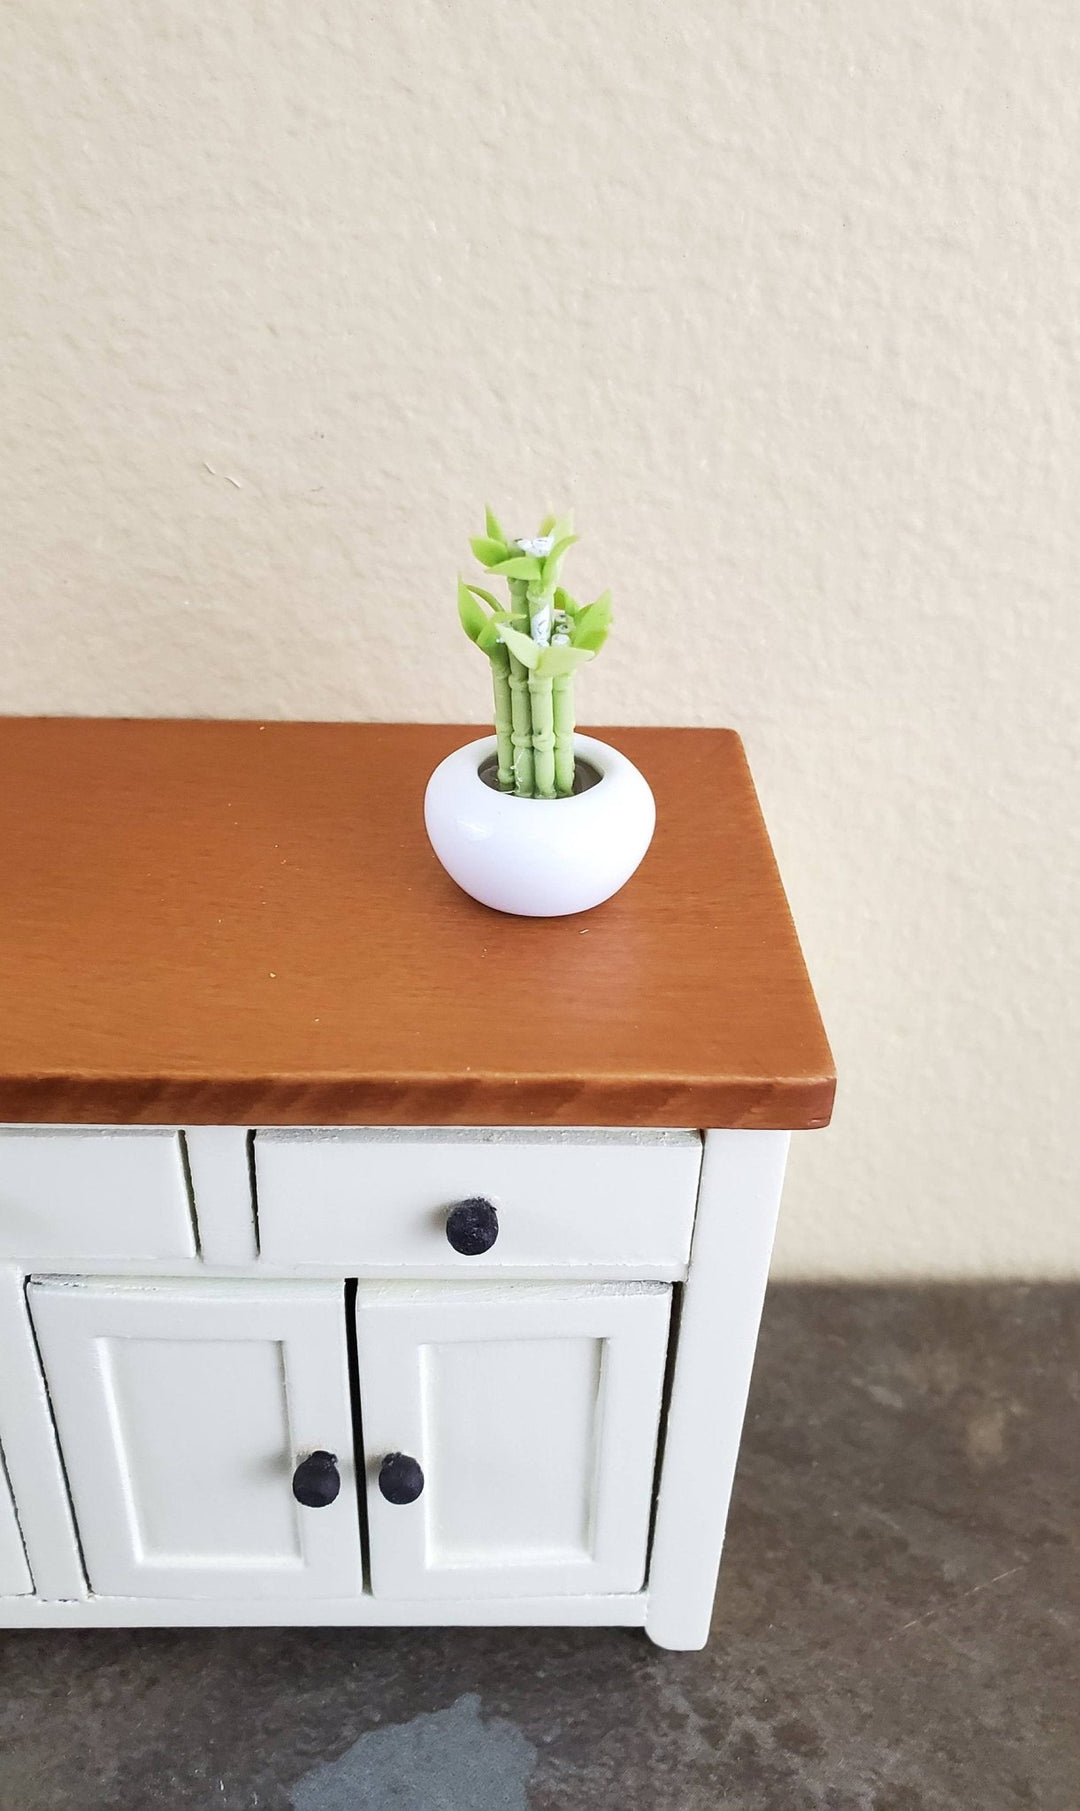 Dollhouse Miniature Lucky Bamboo Plant Stalks in Ceramic Pot 1:12 Scale Houseplant - Miniature Crush